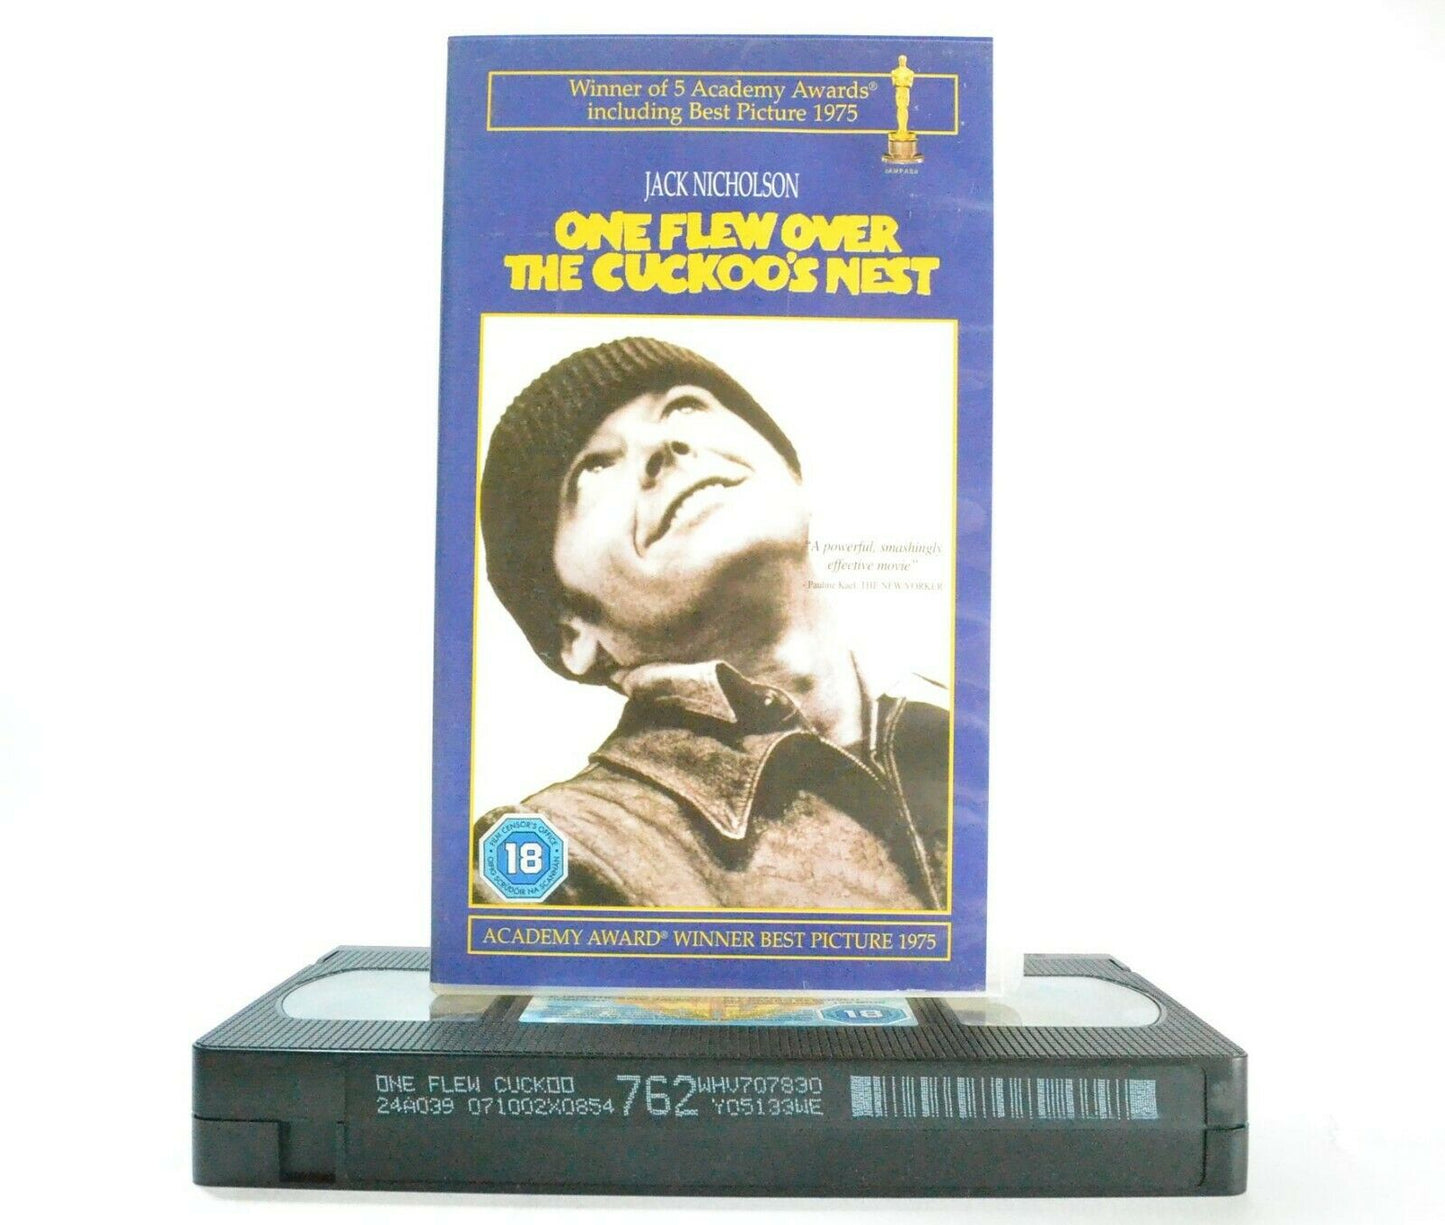 One Flew Over The Cuckoo's Nest: Milos Forman Drama - Jack Nicholson - Pal VHS-